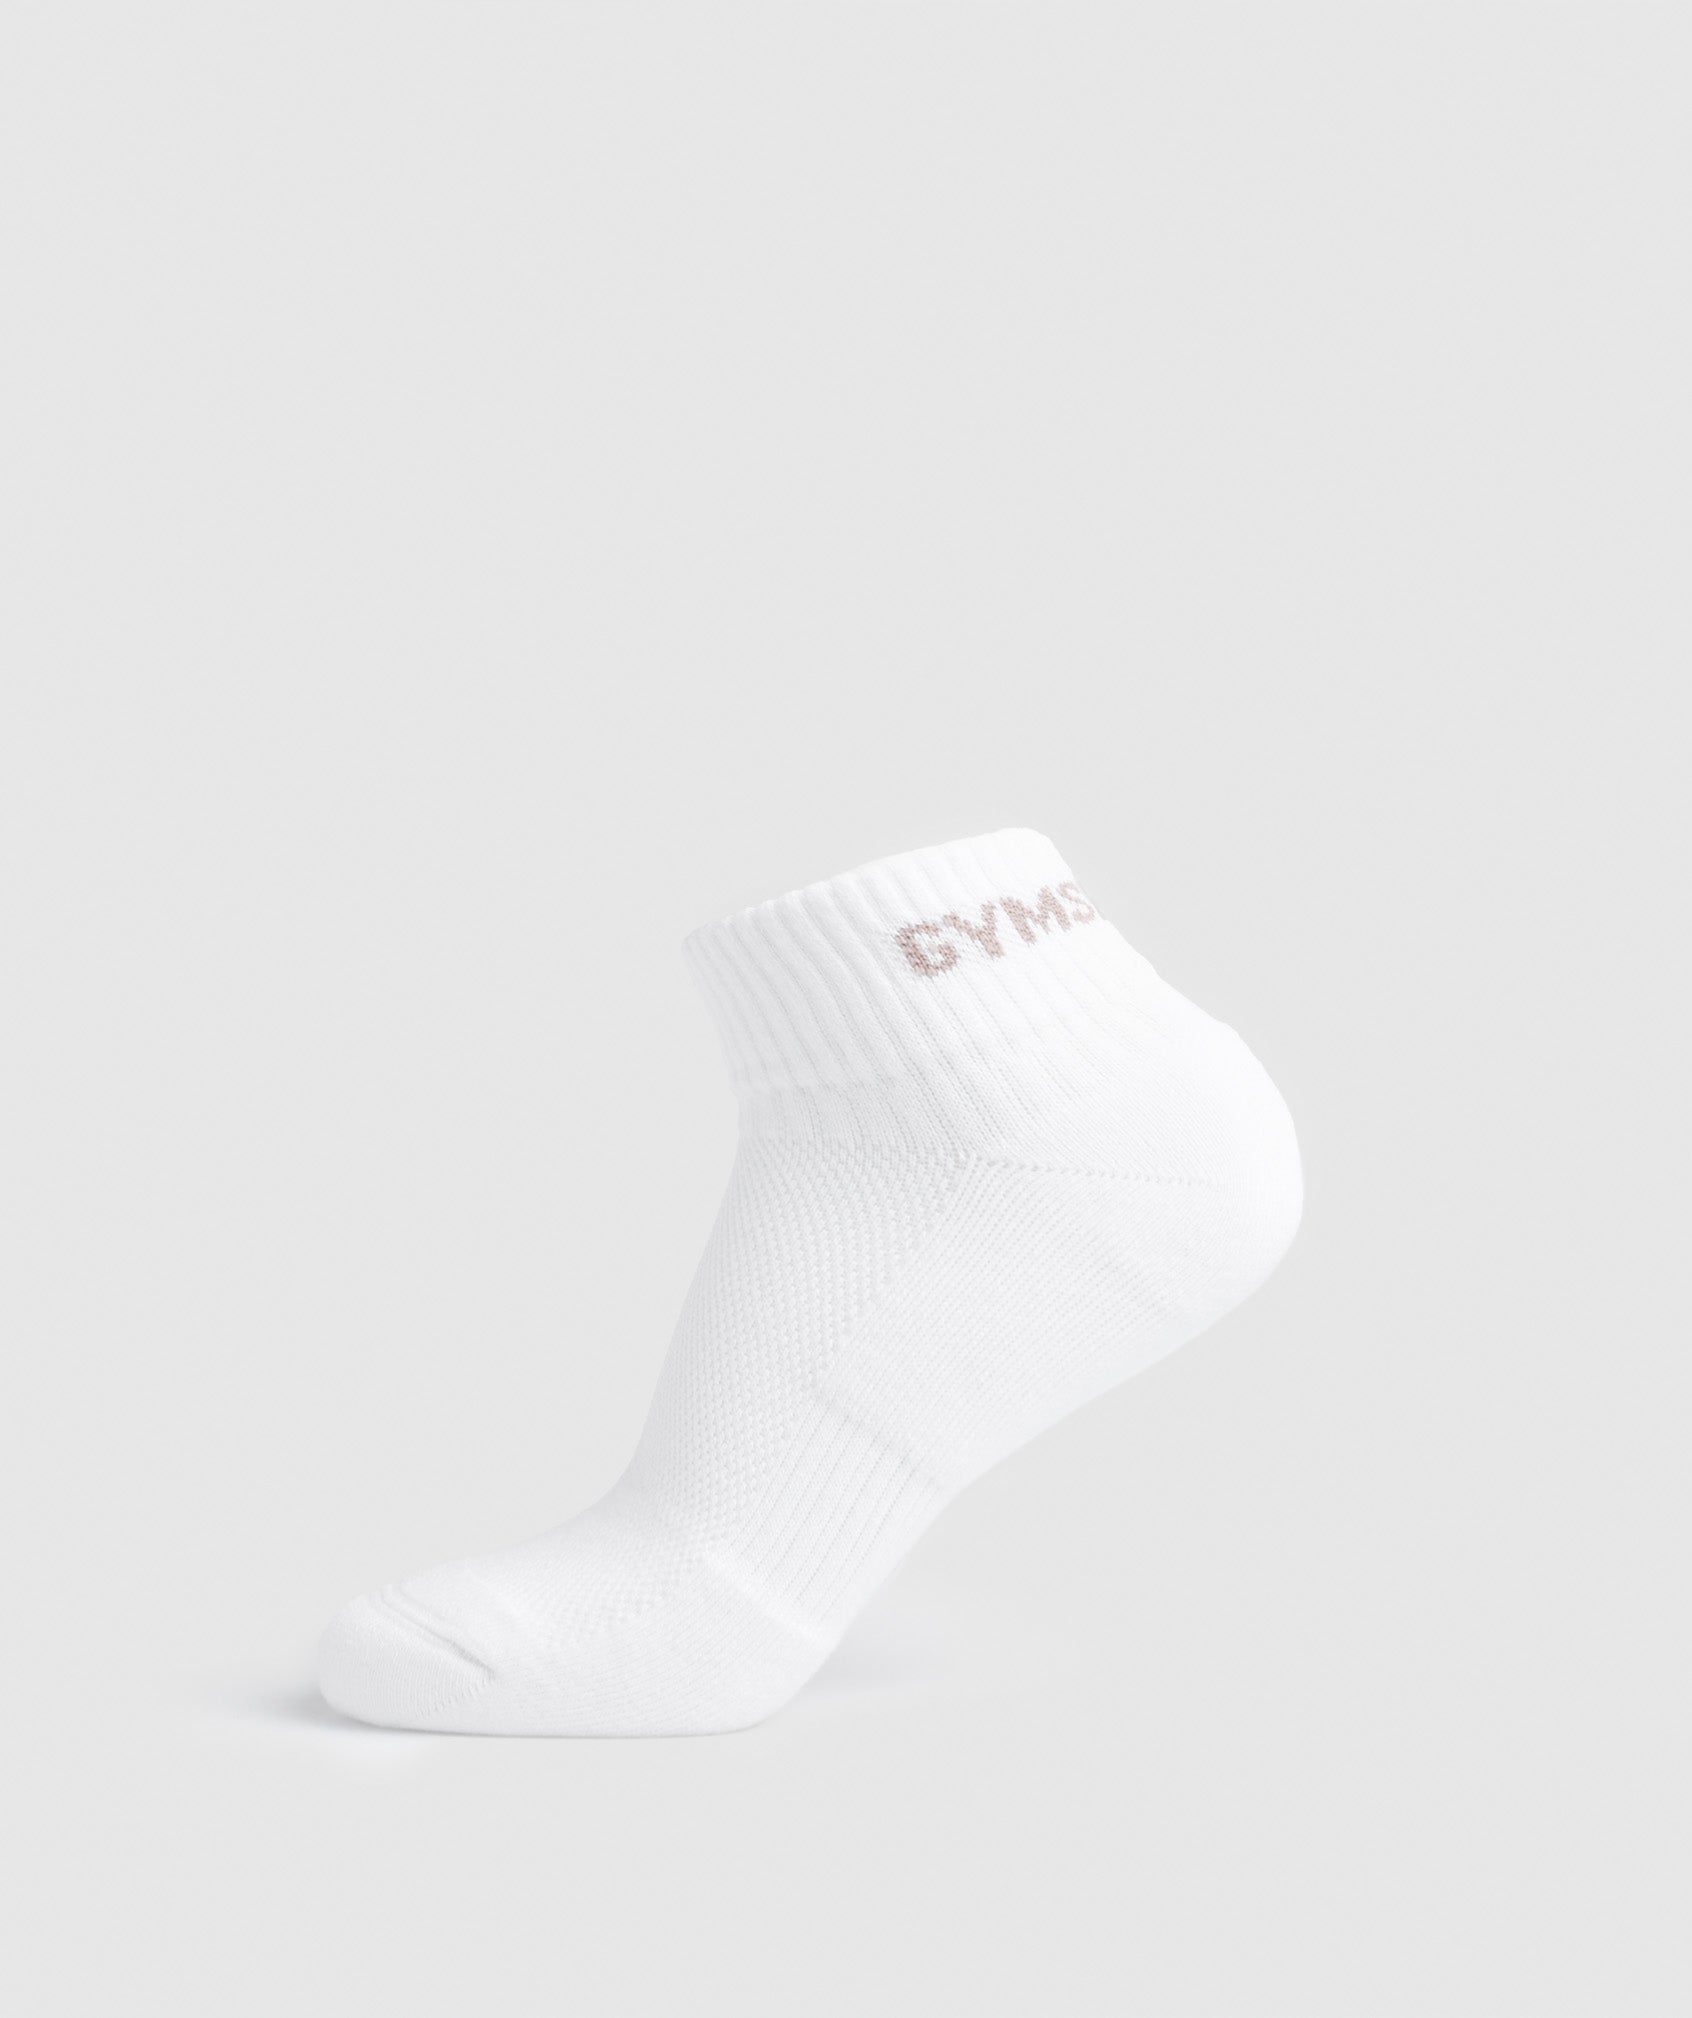 Jacquard Quarter Socks 3pk in Olive/White/Modern Blush Pink - view 5